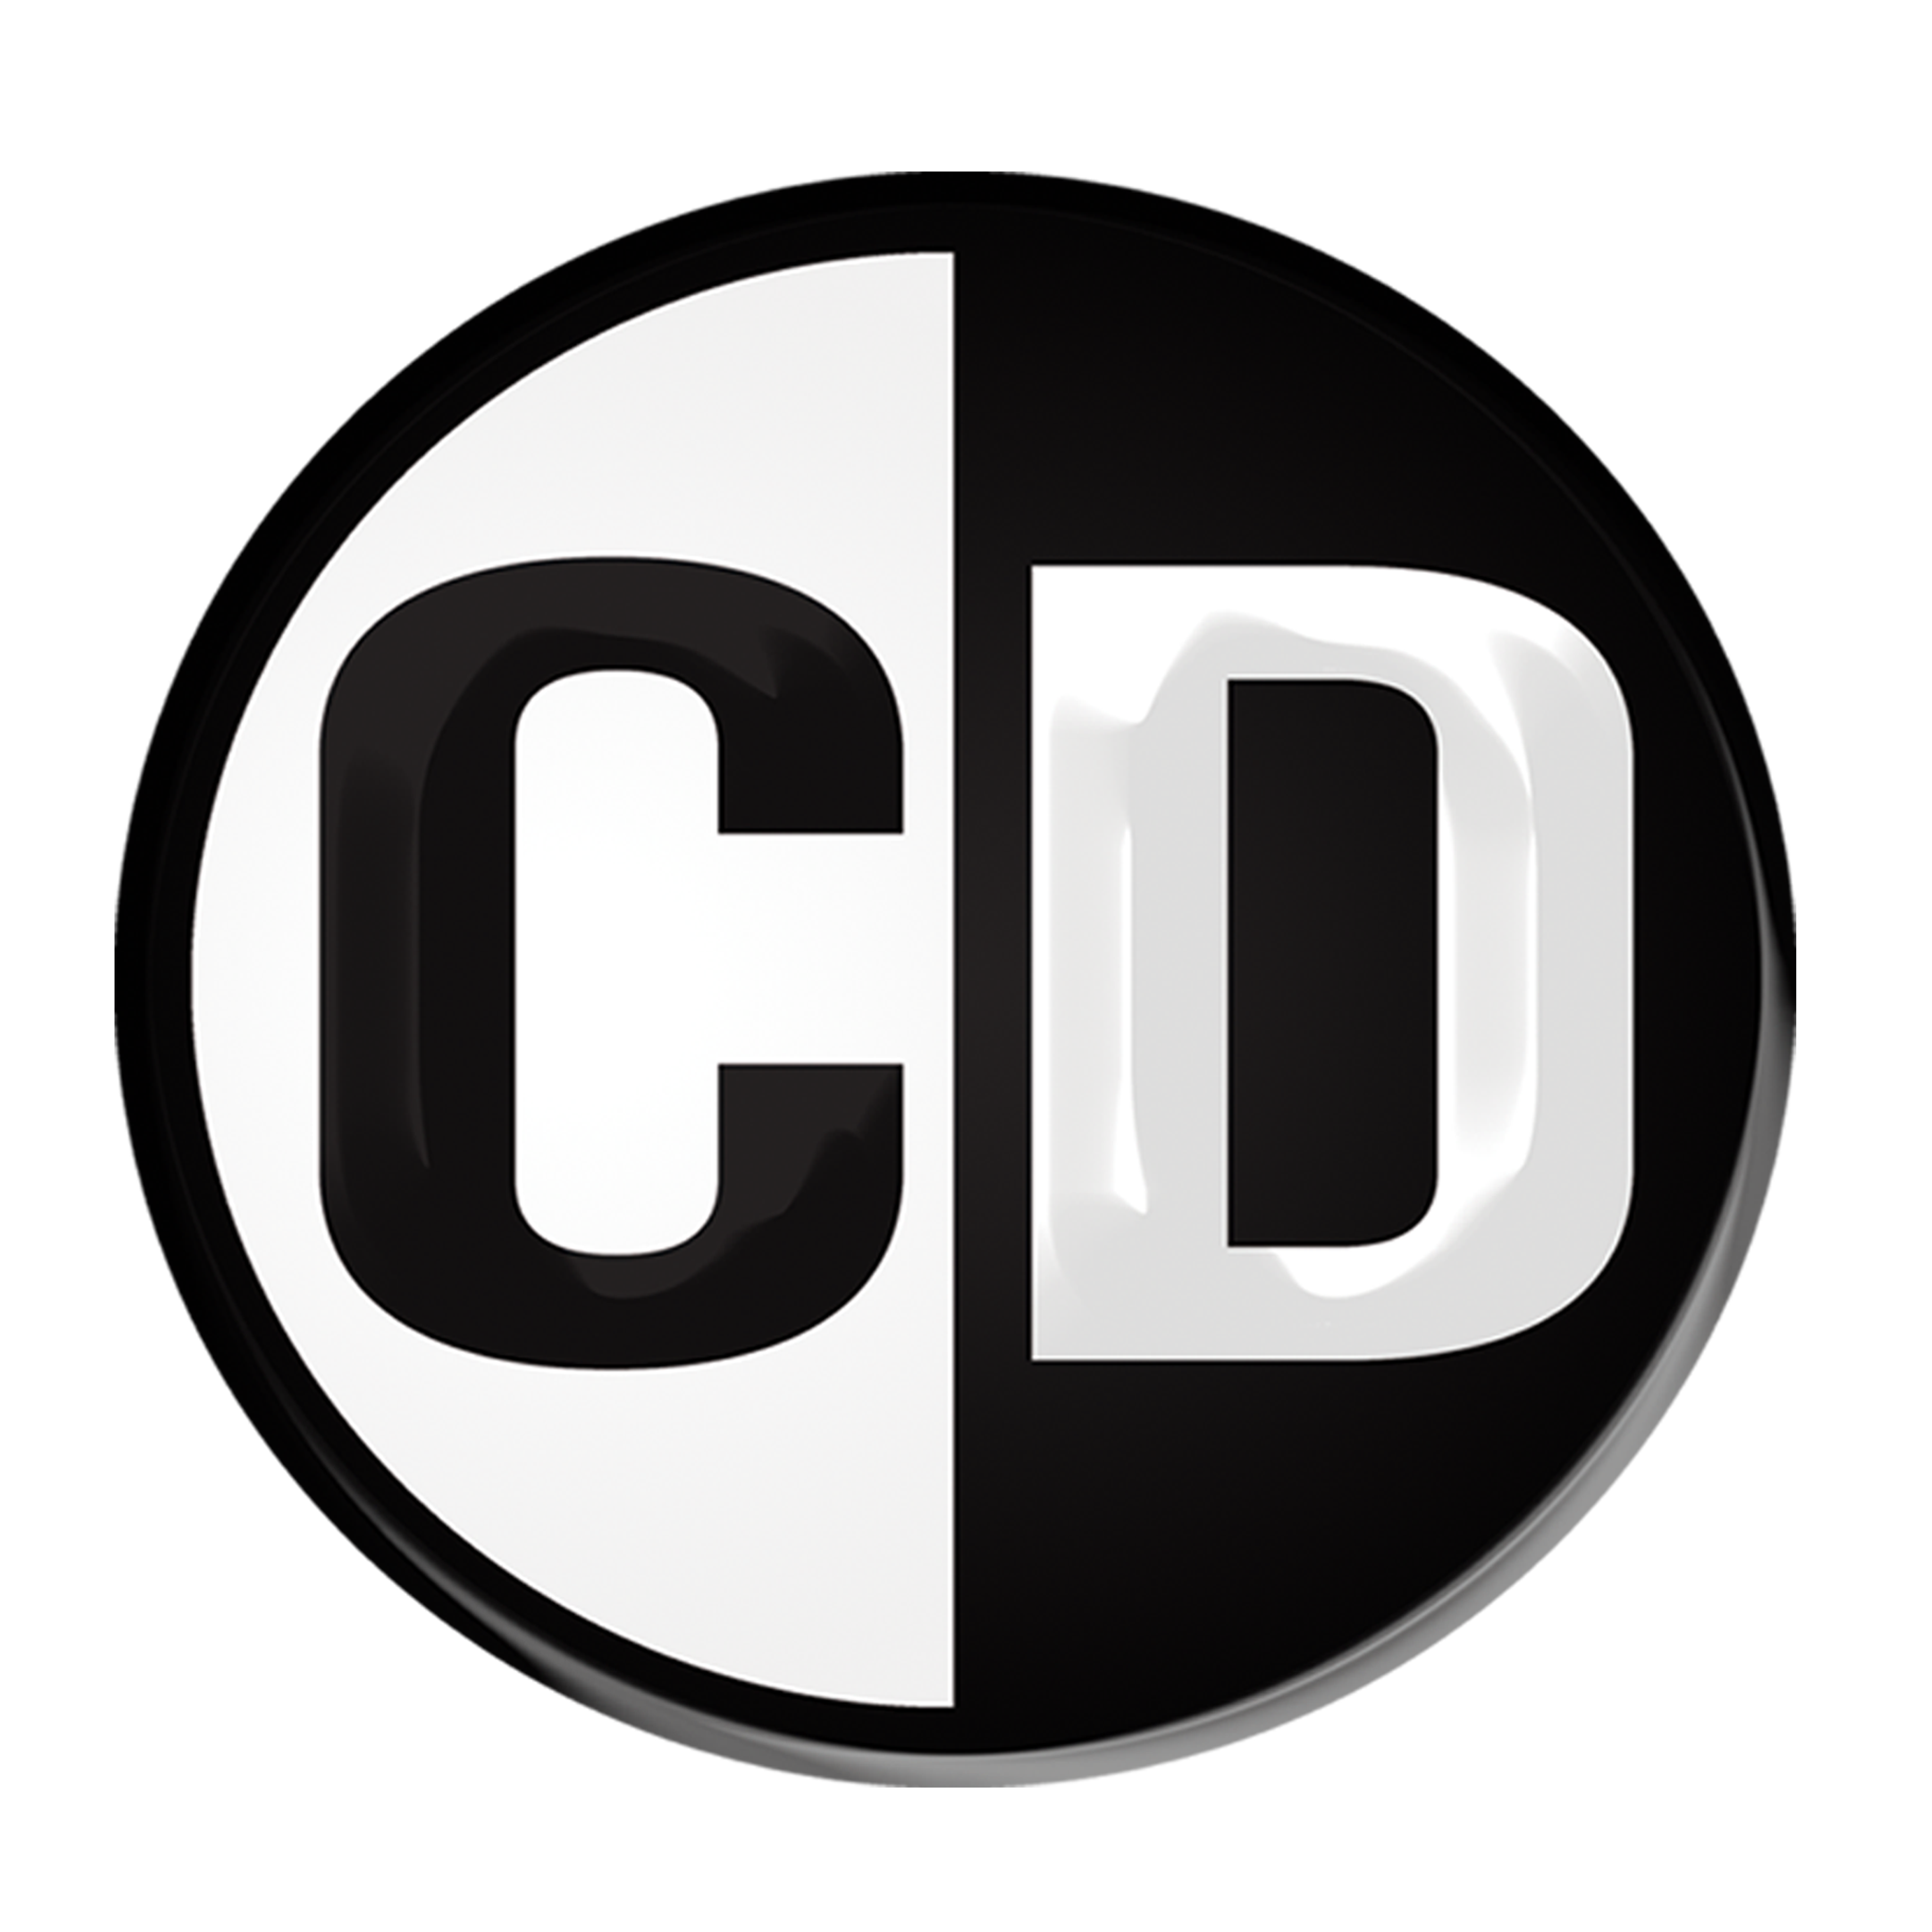 Логотип CD. Компакт диск логотип. Логотип Compact Disc. Audio CD значок.